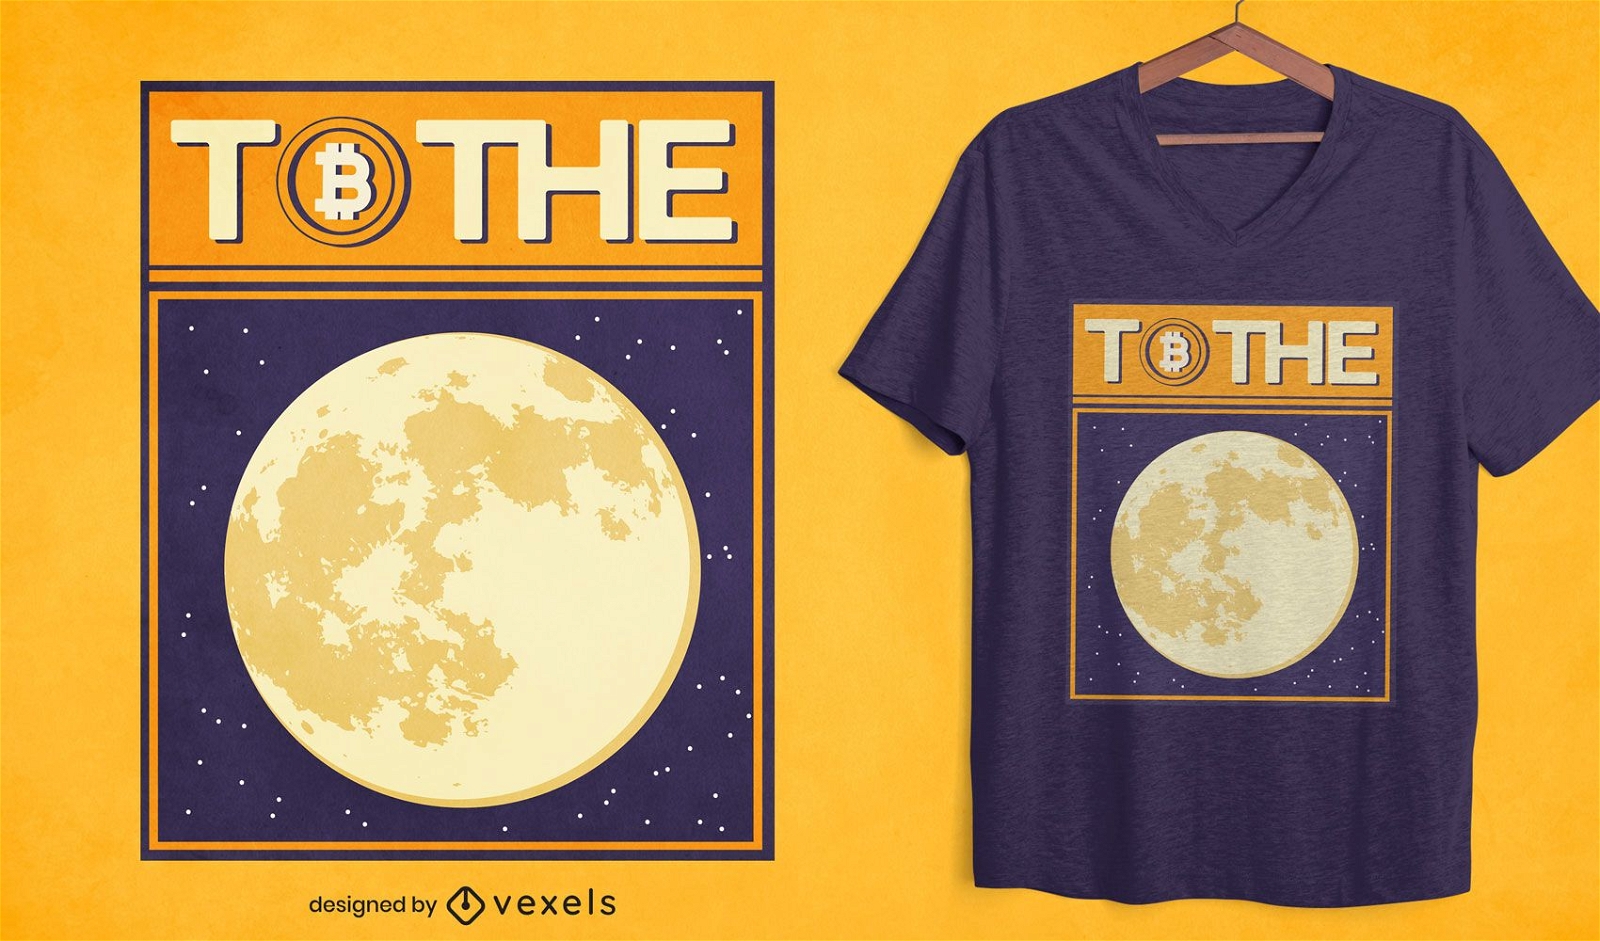 Moon shining in space t-shirt design